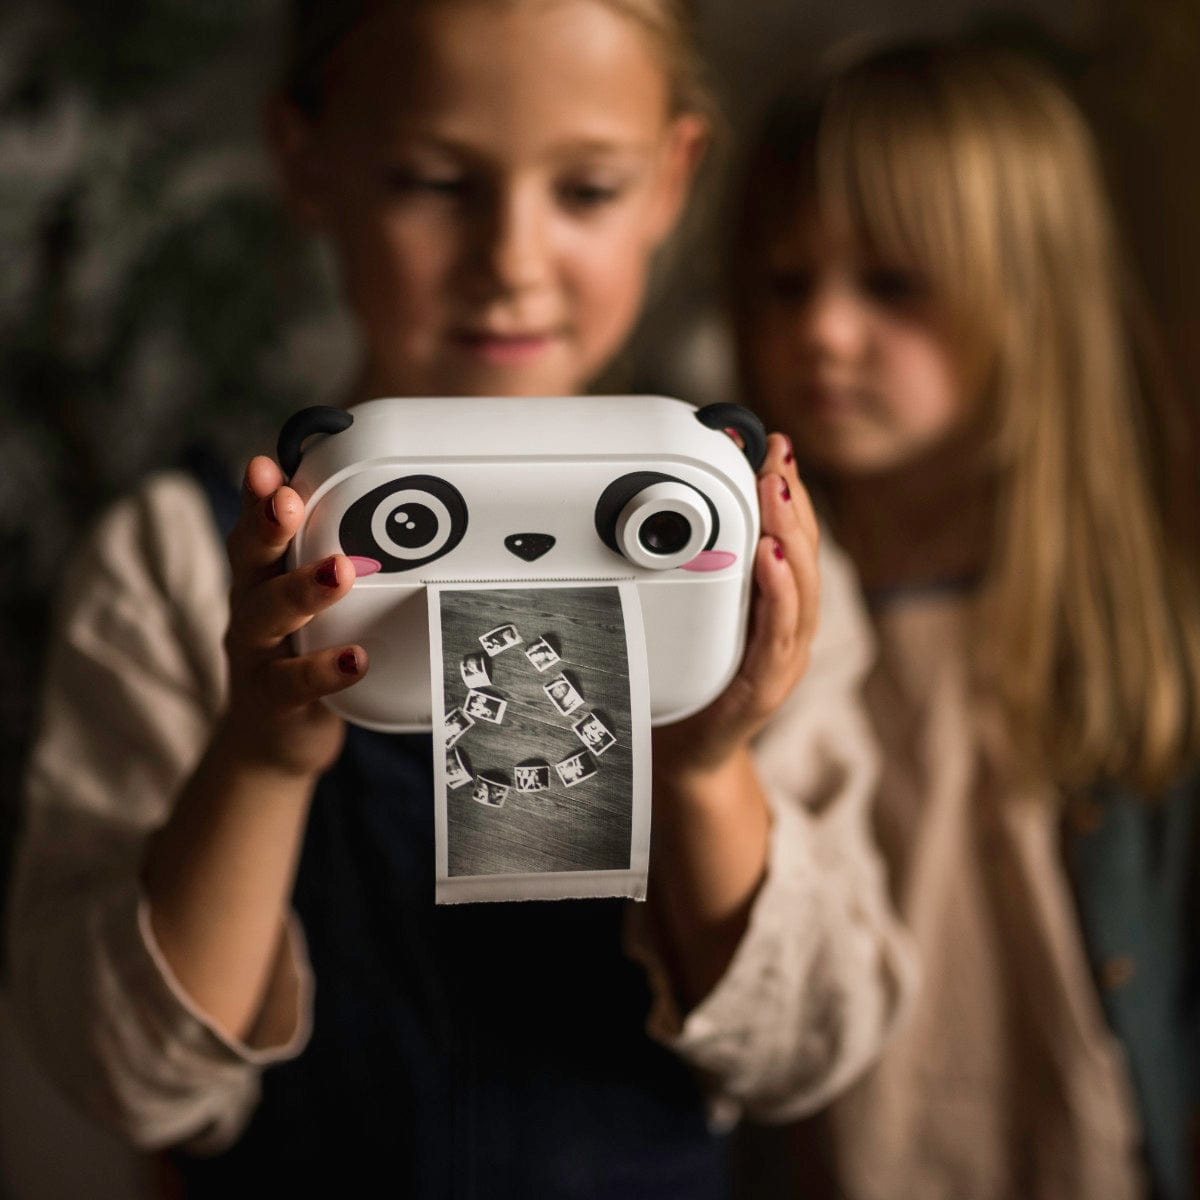 Crayola 2.1 Megapixel Digital Camera Kit Children's First Camera